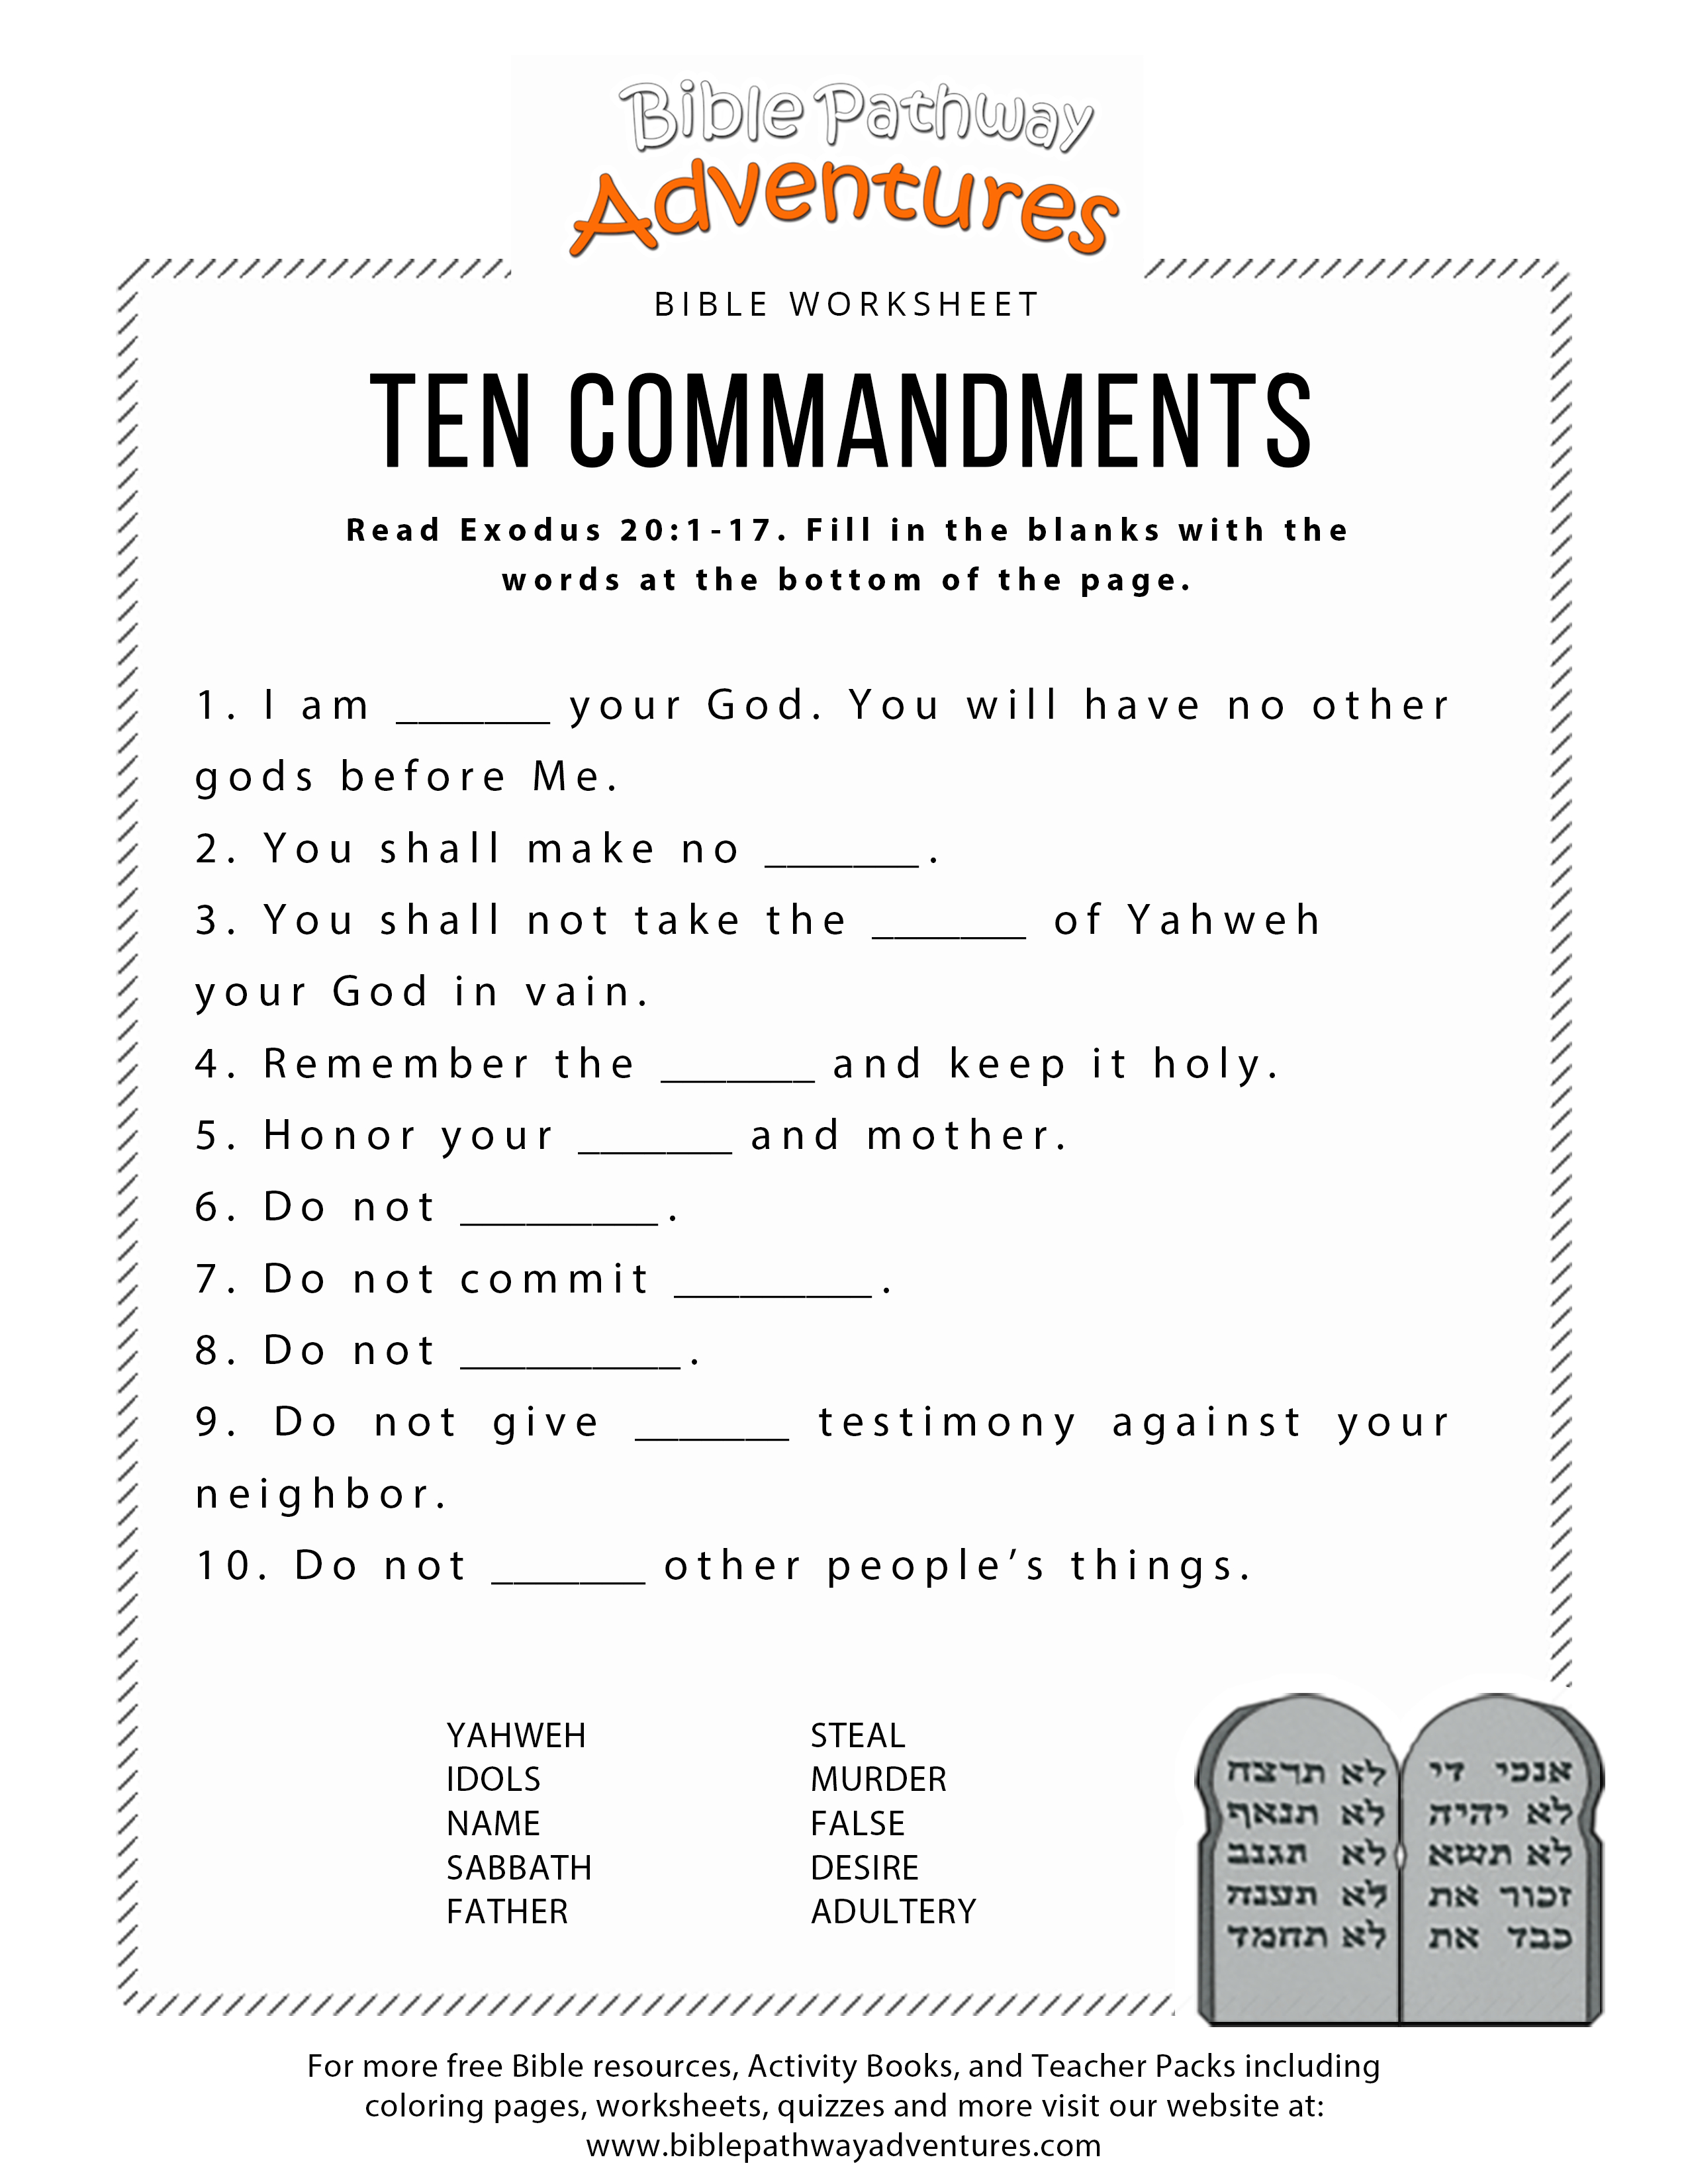 Ten Commandments Worksheet For Kids - Free Printable Ten Commandments Coloring Pages